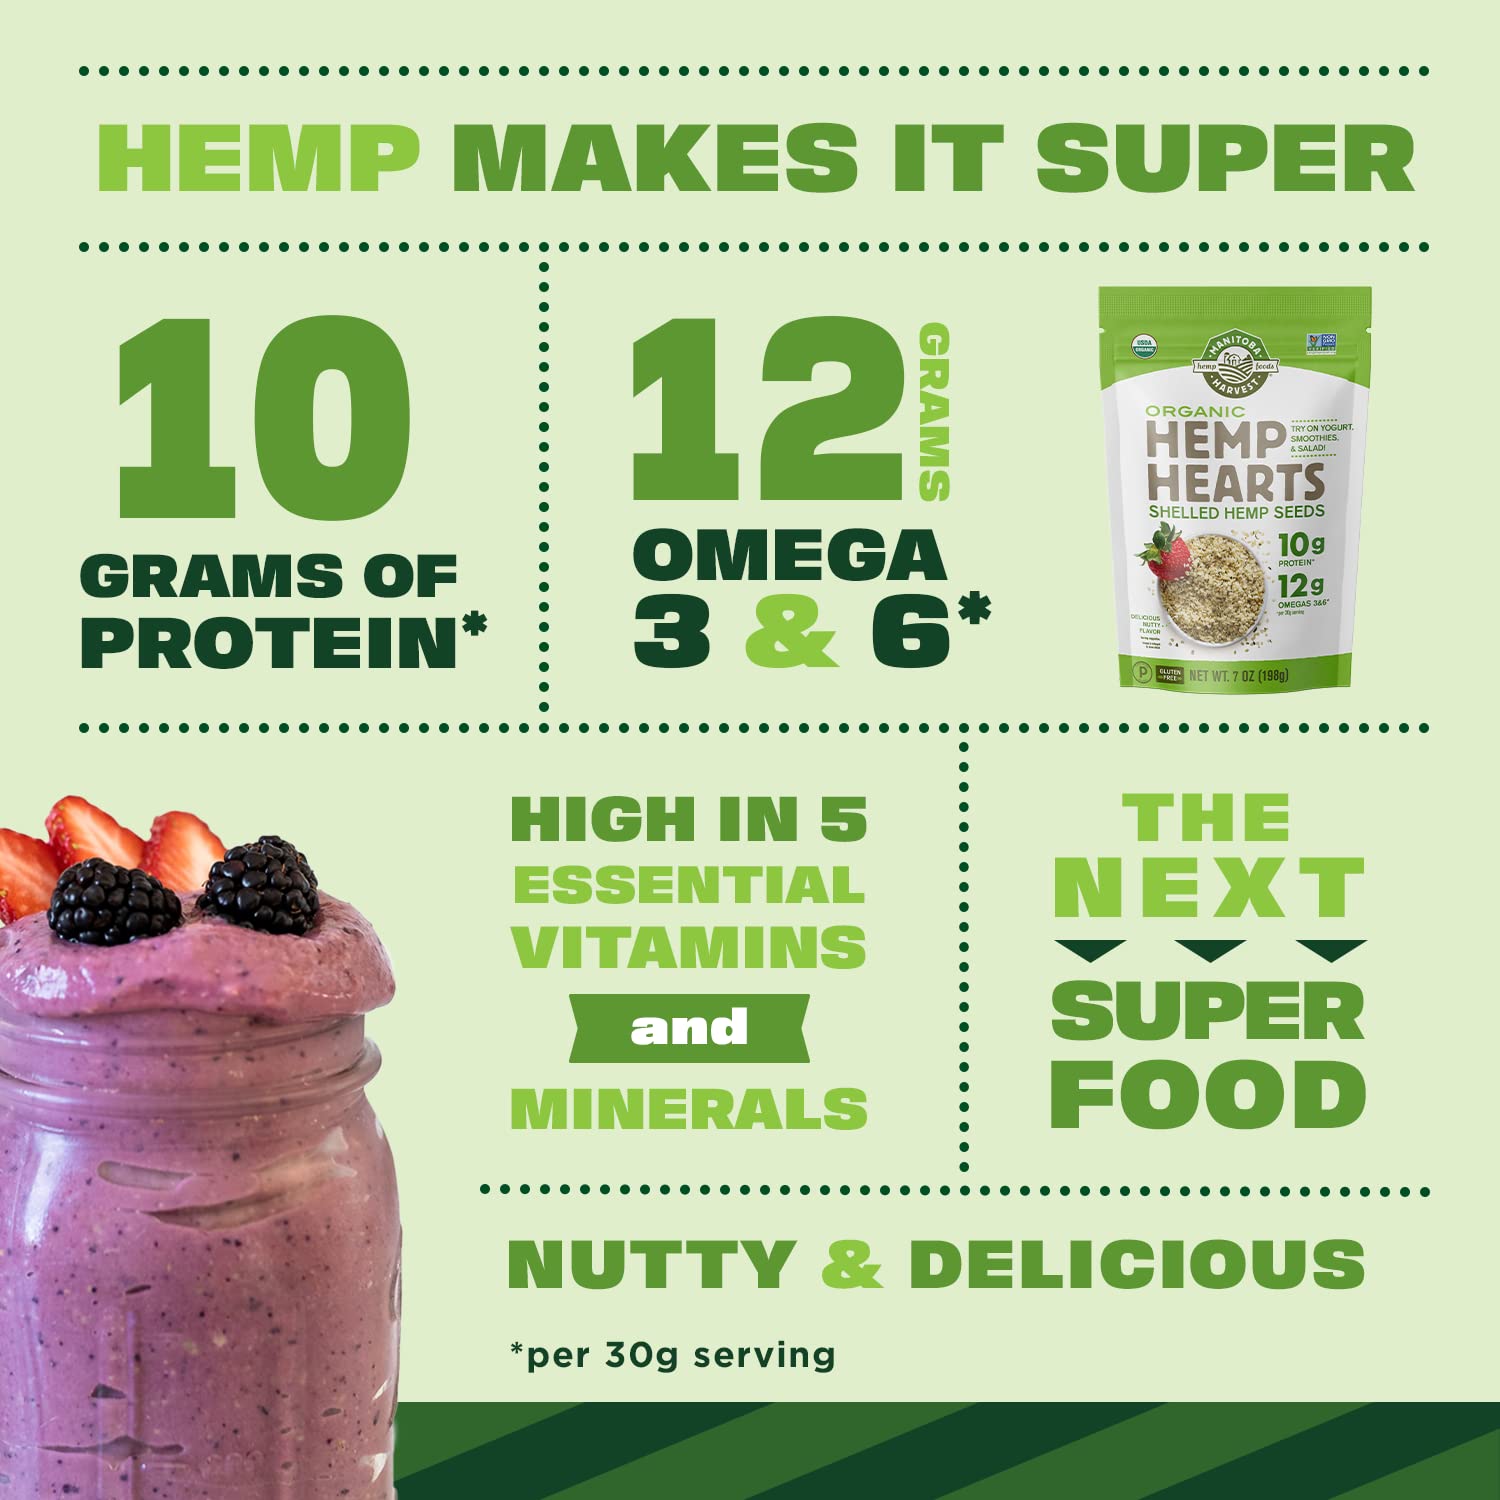 Organic Hemp Hearts, 12oz; 10g Plant Based Protein and 12g Omega 3 6 per Srv | Smoothies, yogurt salad | Non-GMO, Vegan, Keto, Paleo, Gluten Free | Manitoba Harvest